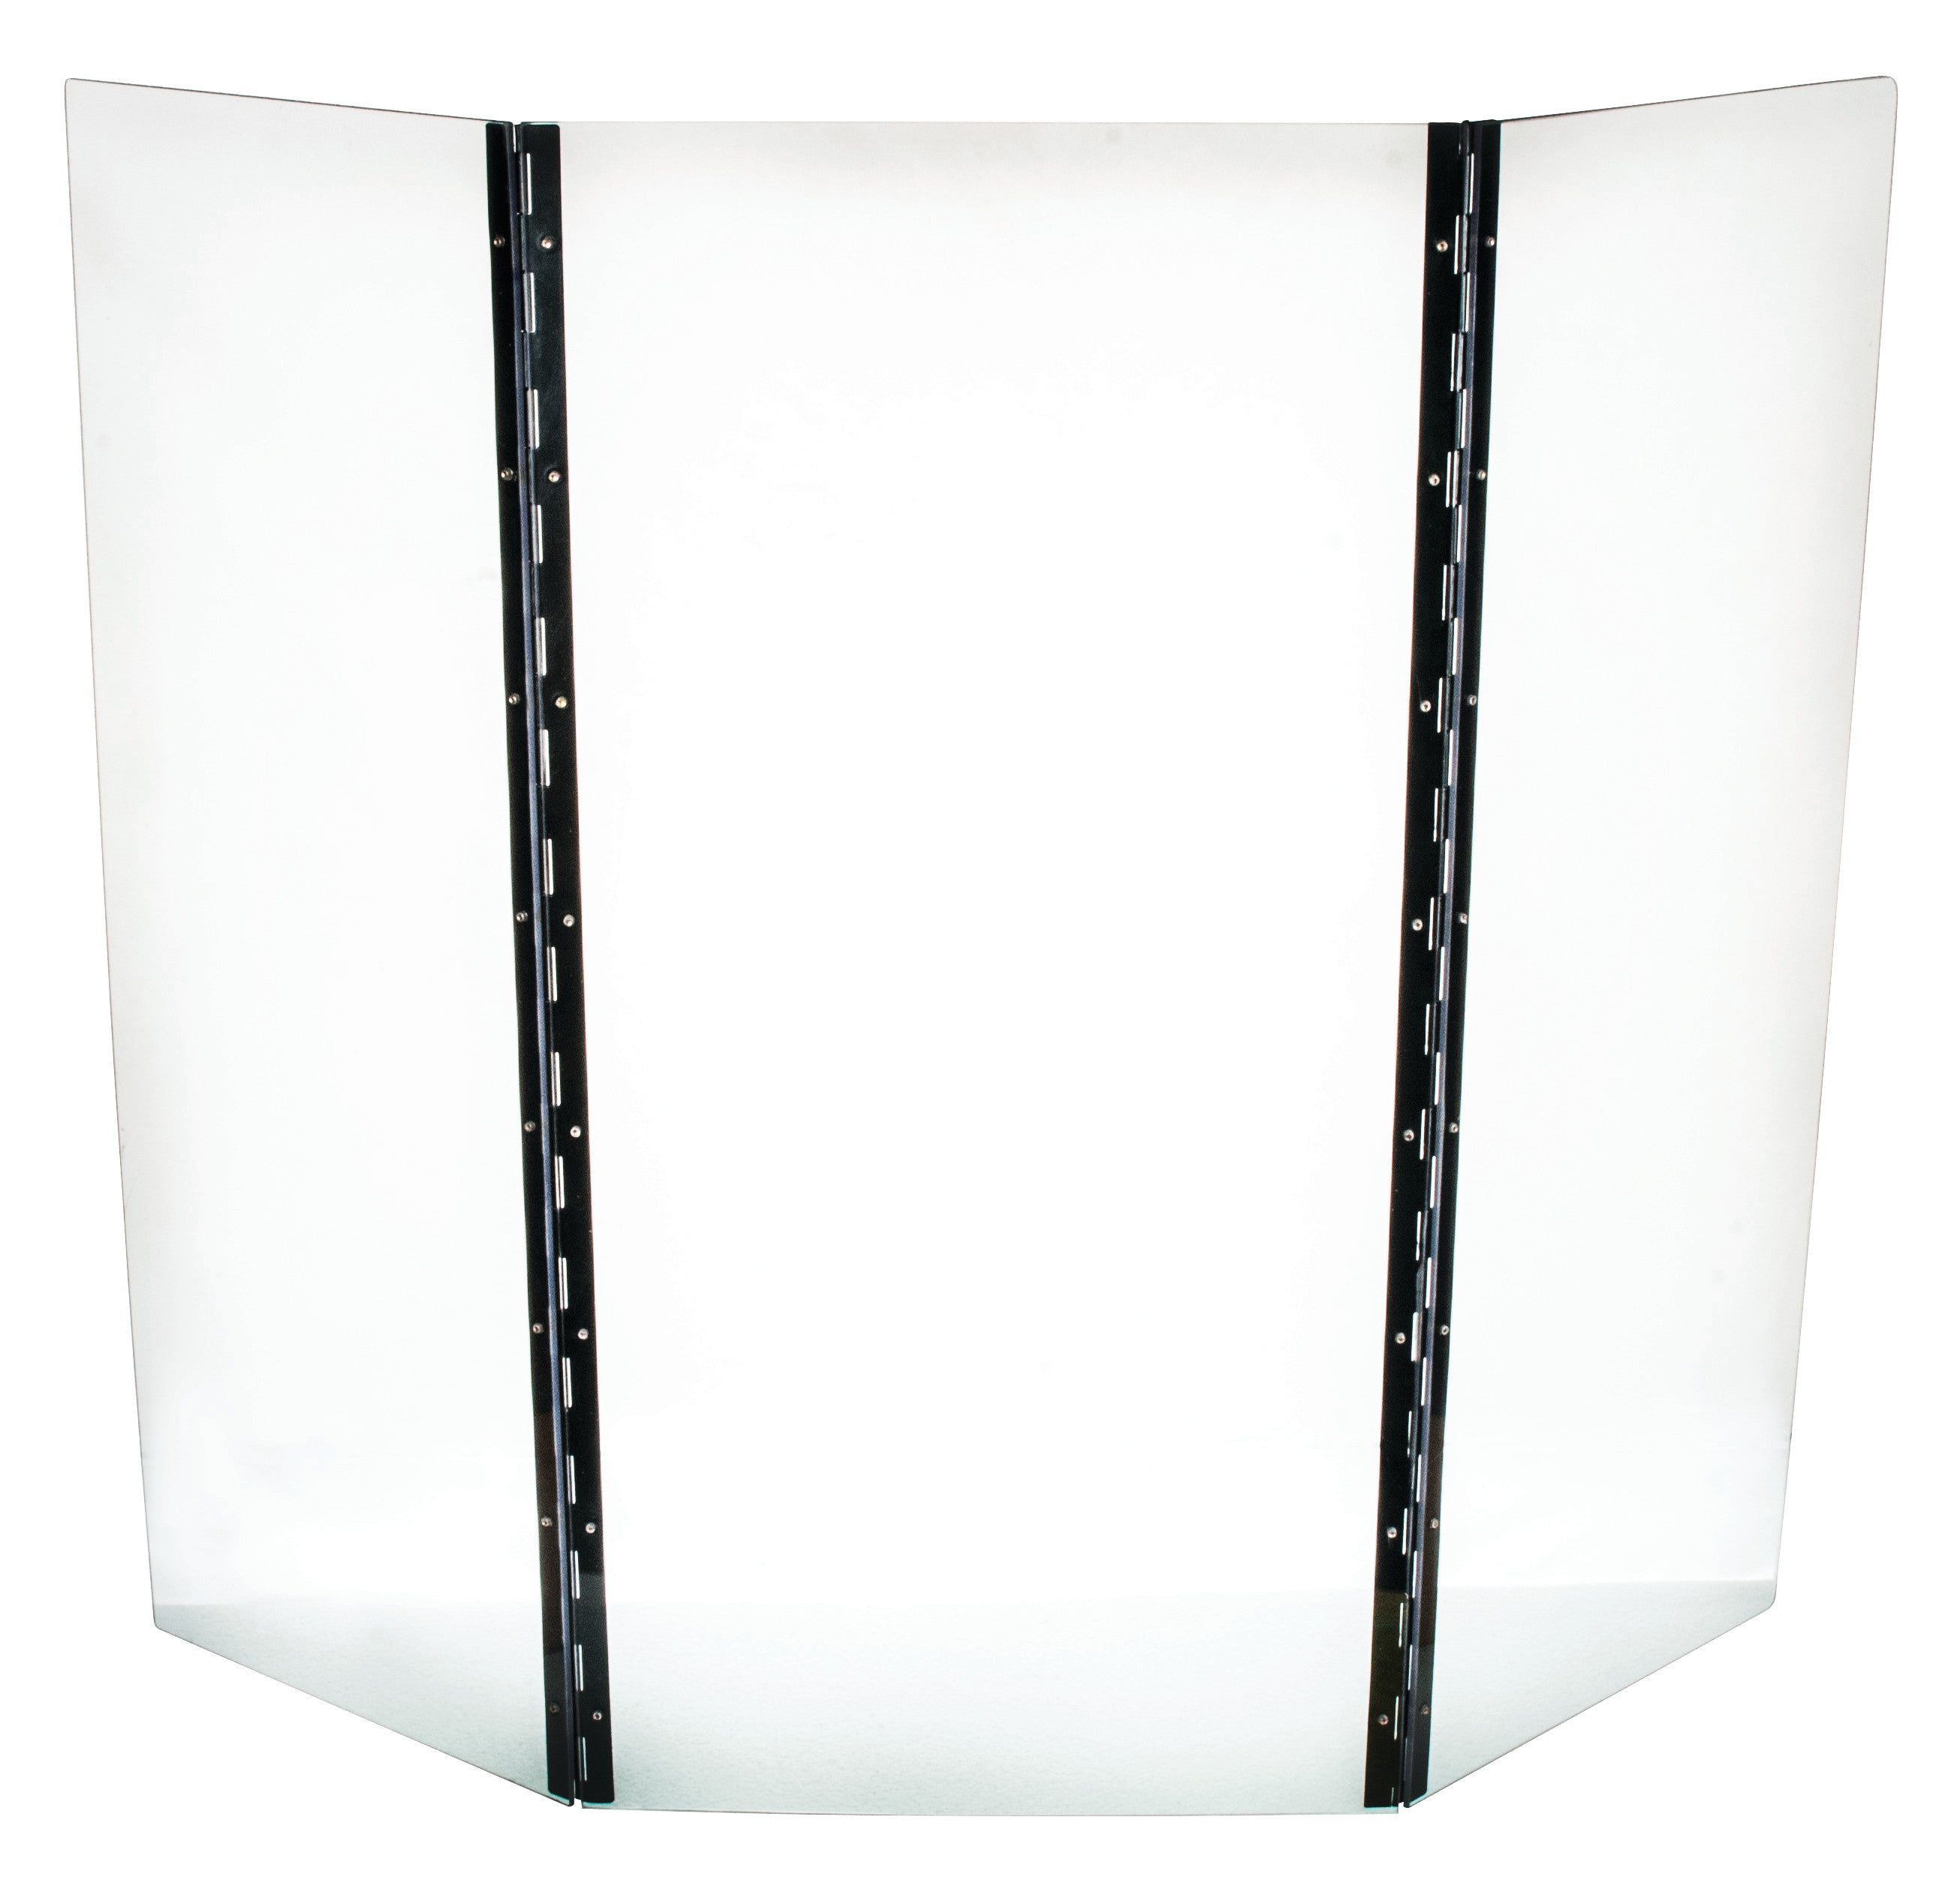 Polycarbonate Safety Shield, 3 Panels